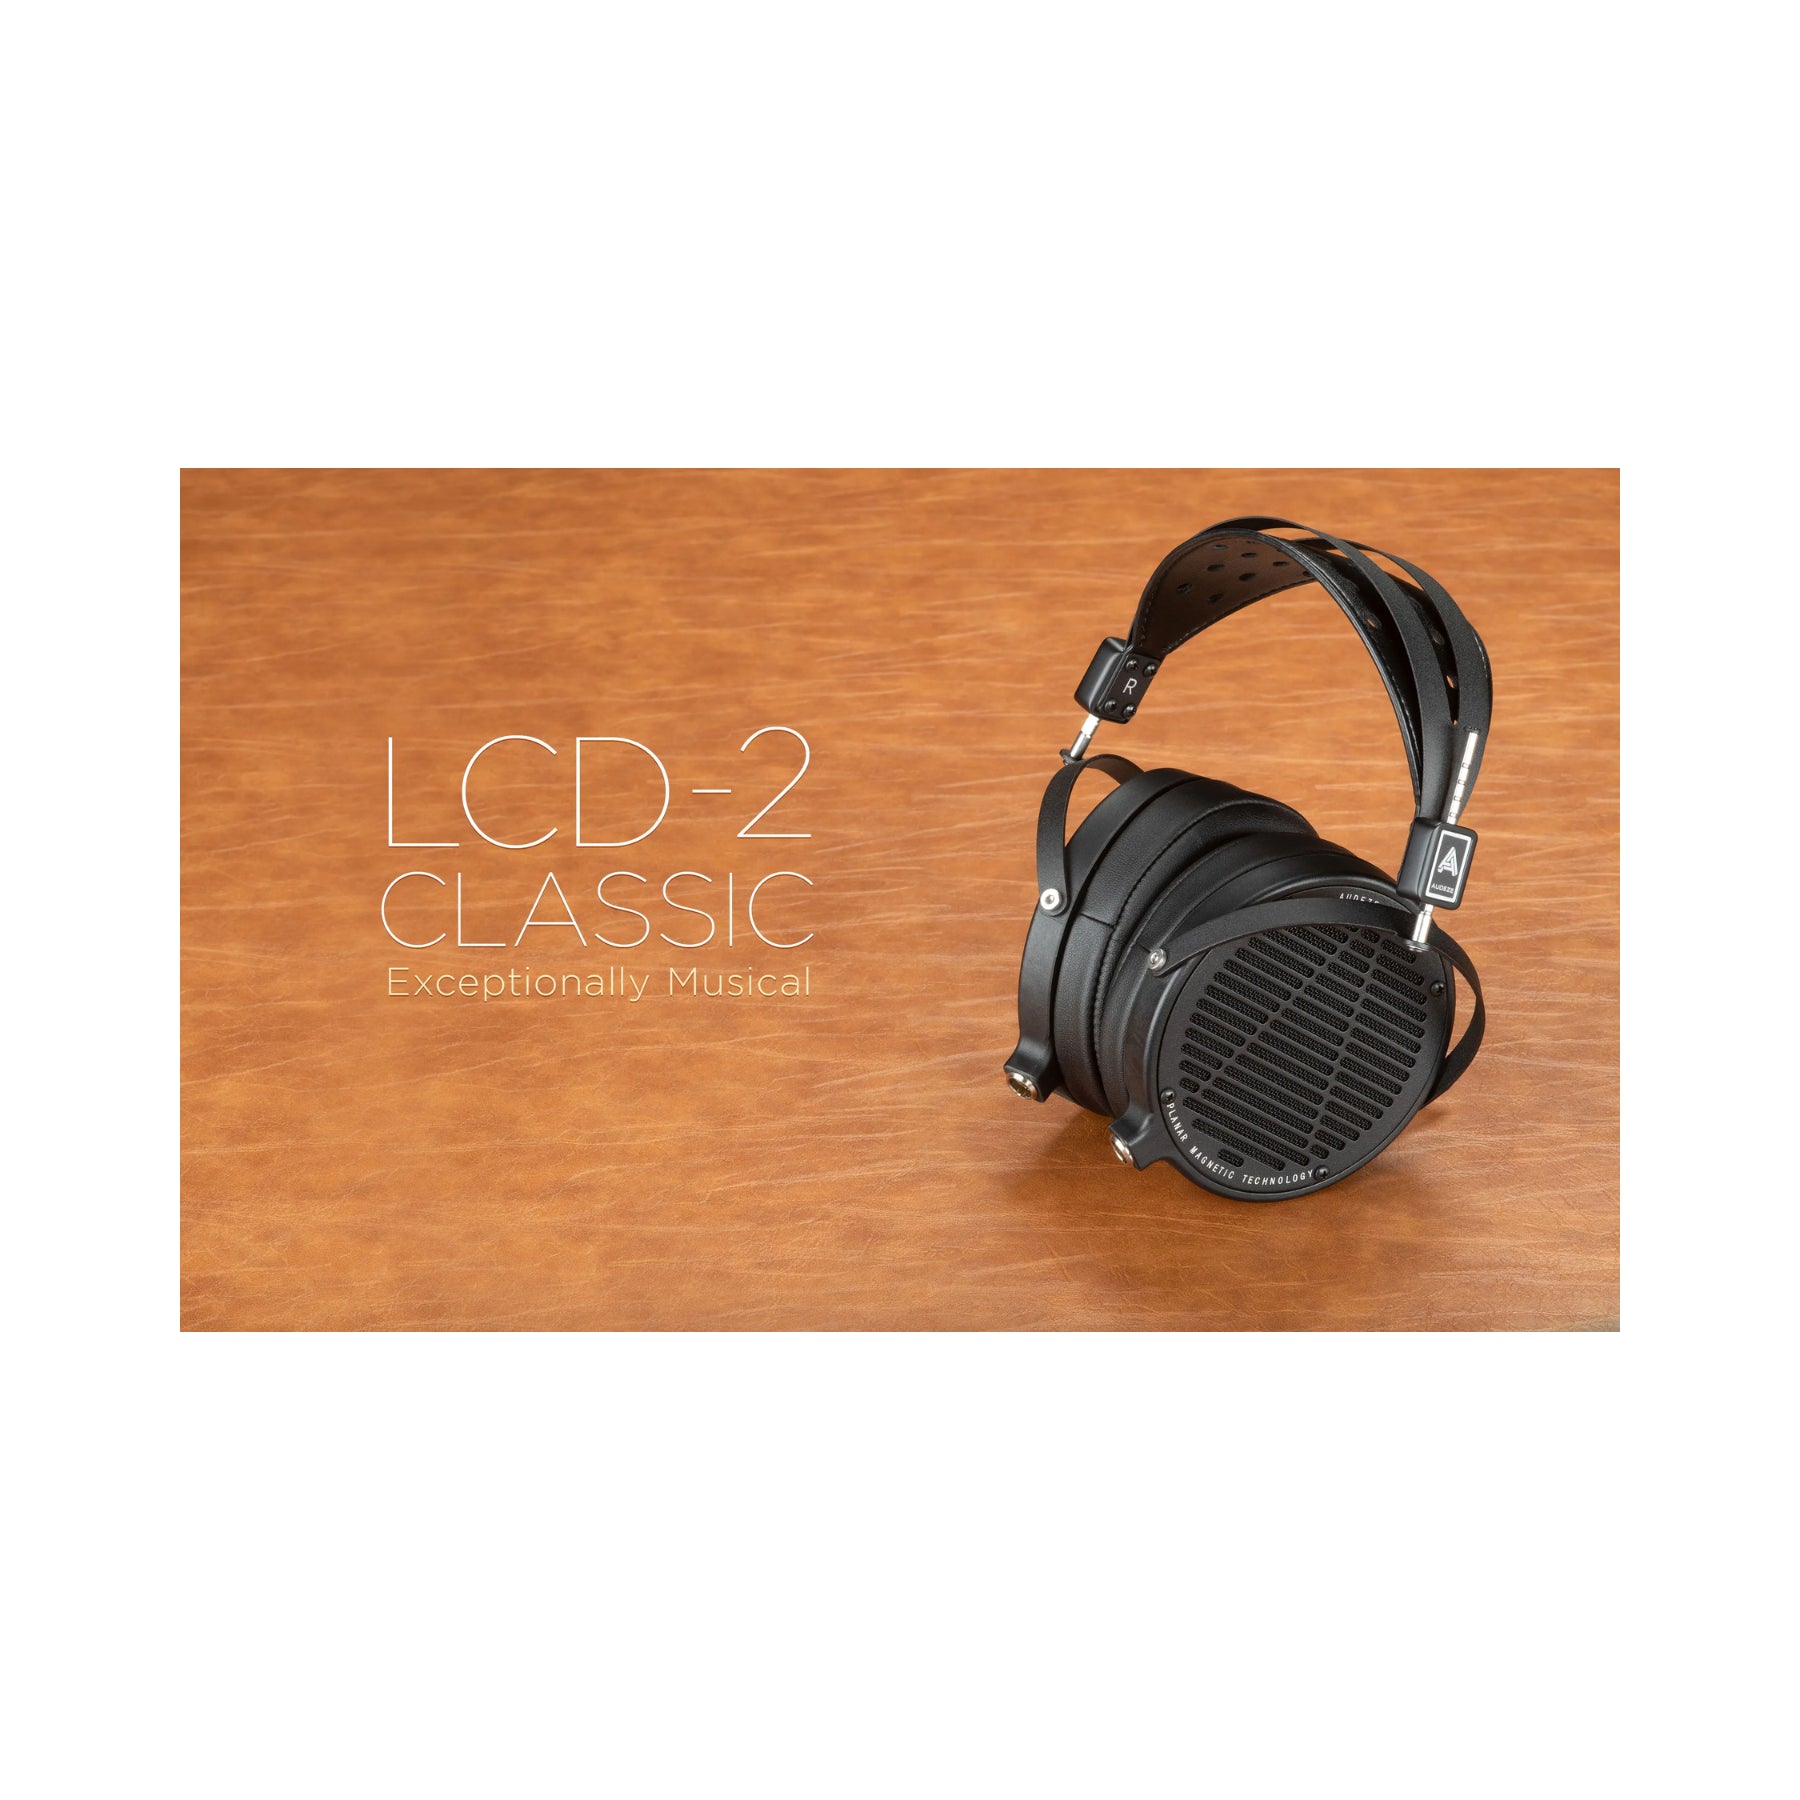 Audeze LCD-2 Classic Over Ear Open Back Headphone | ListenUp